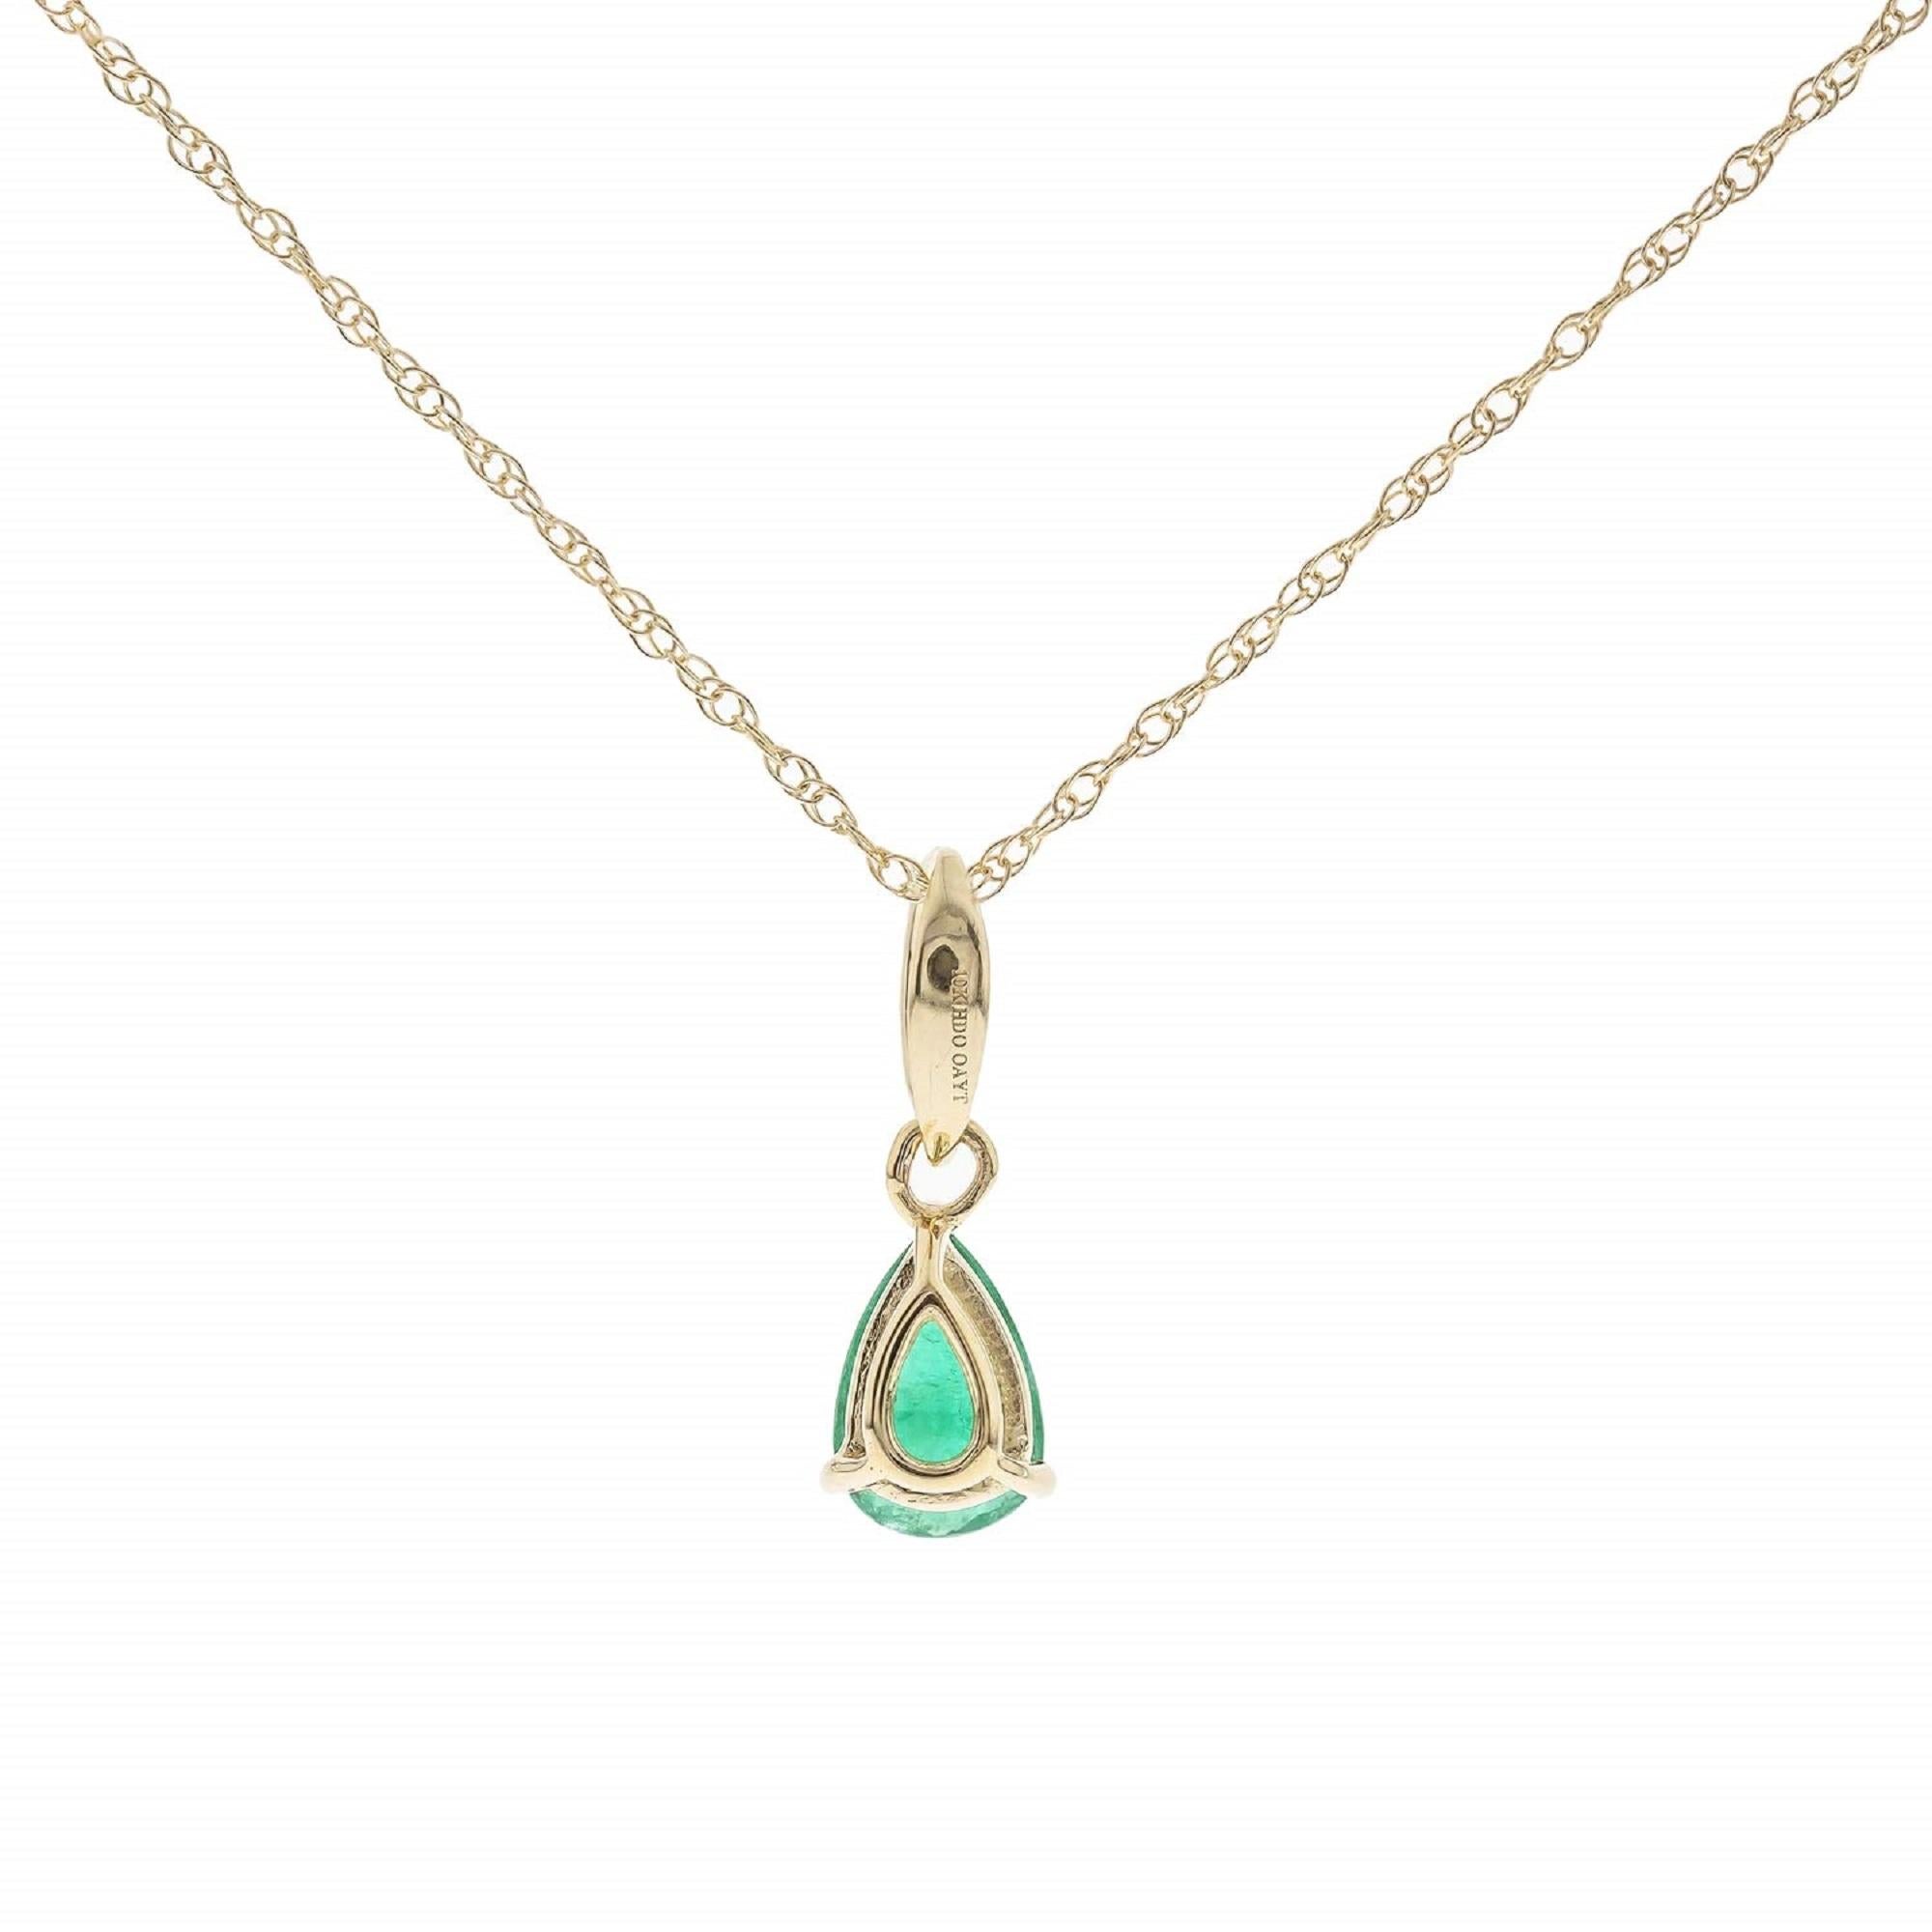 Art Deco 0.33 Carat Pear Cut Emerald with Diamond Accents 10K Yellow Gold Pendant